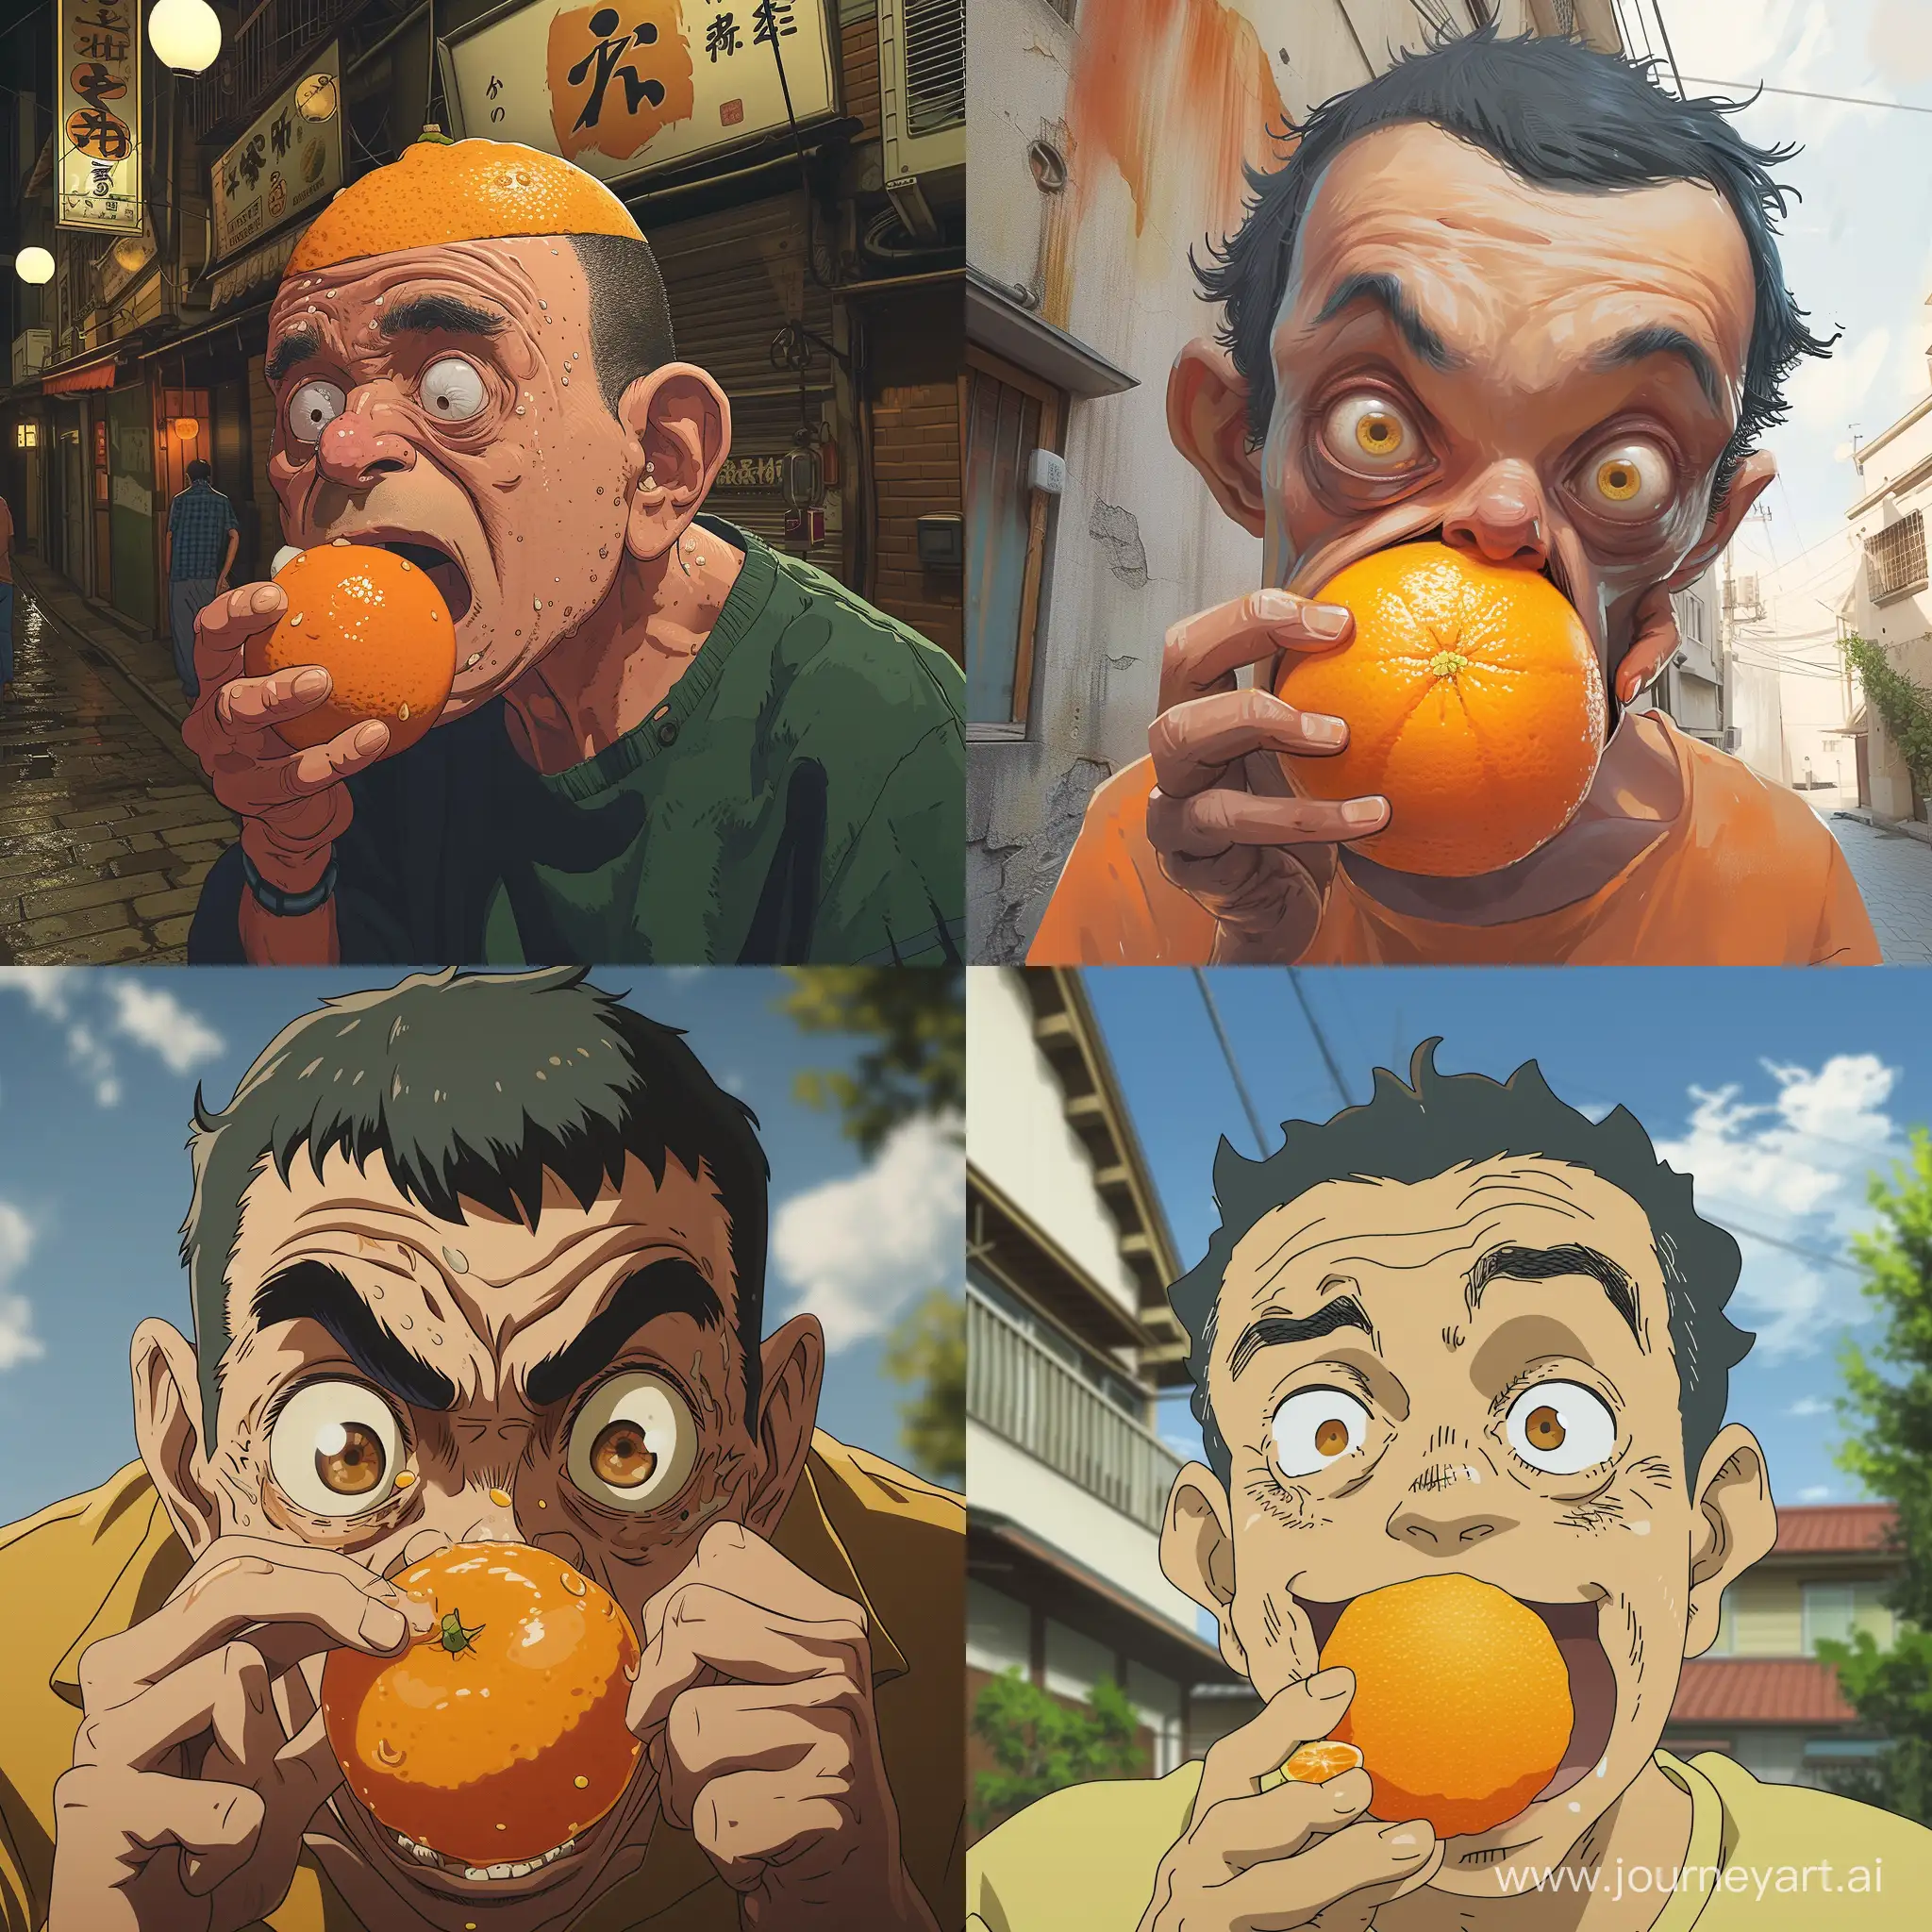 Bulgarian-Man-Enjoying-an-Orange-with-Humorous-Giant-Forehead-in-Anime-Style